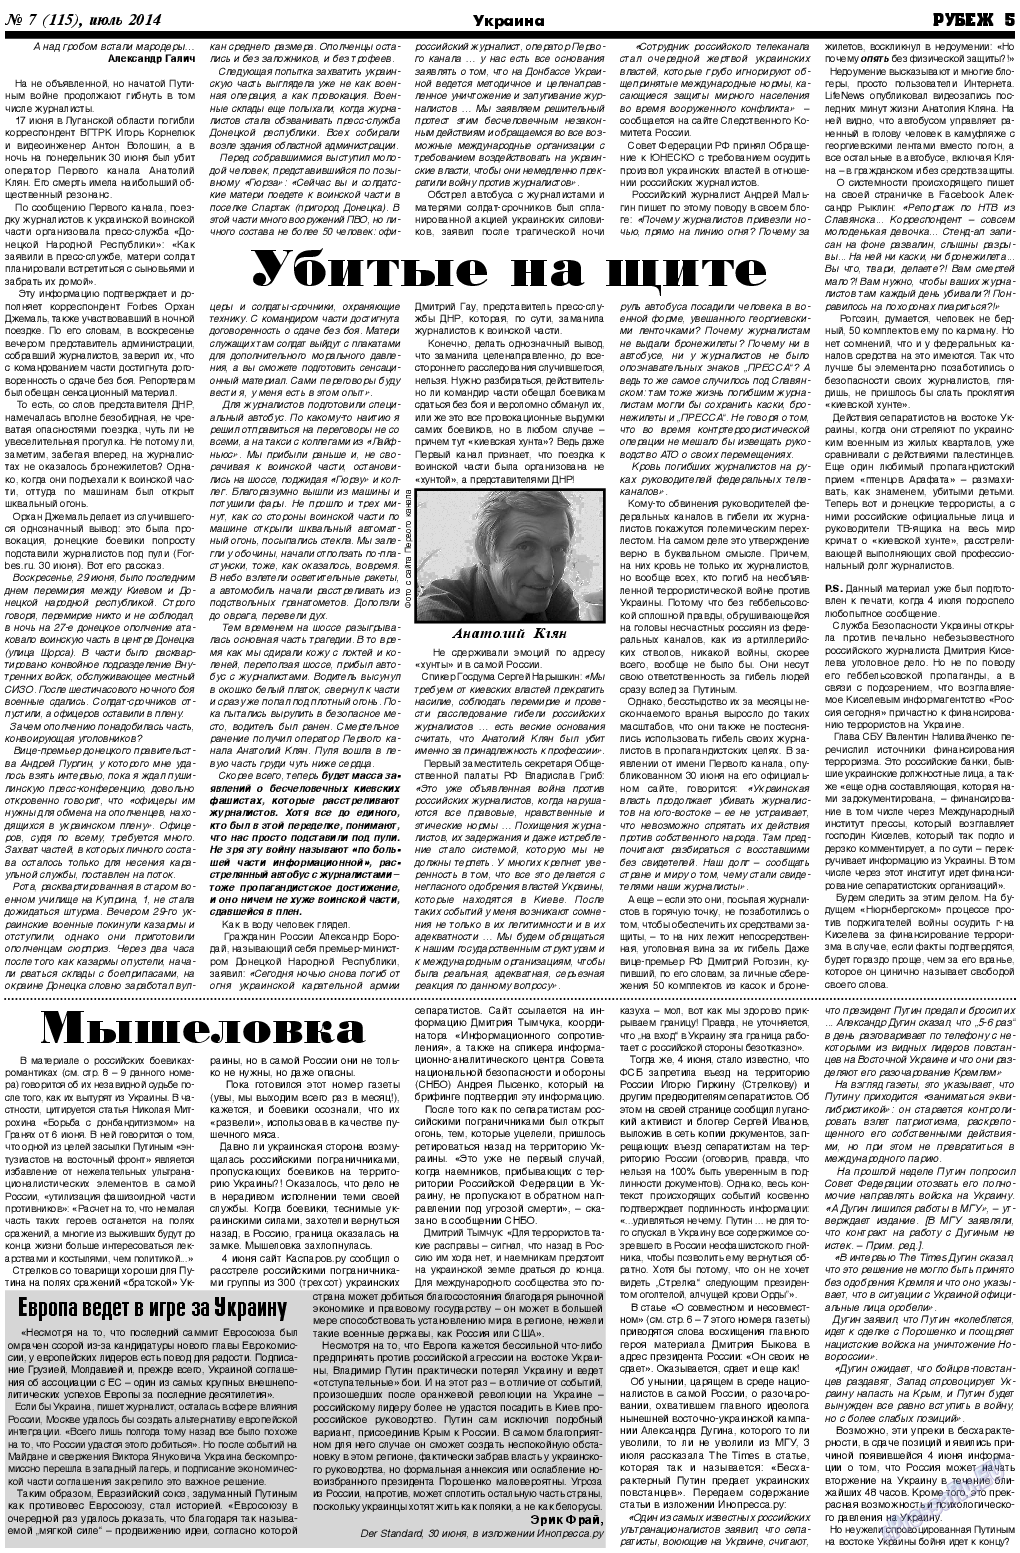 Рубеж, газета. 2014 №7 стр.5